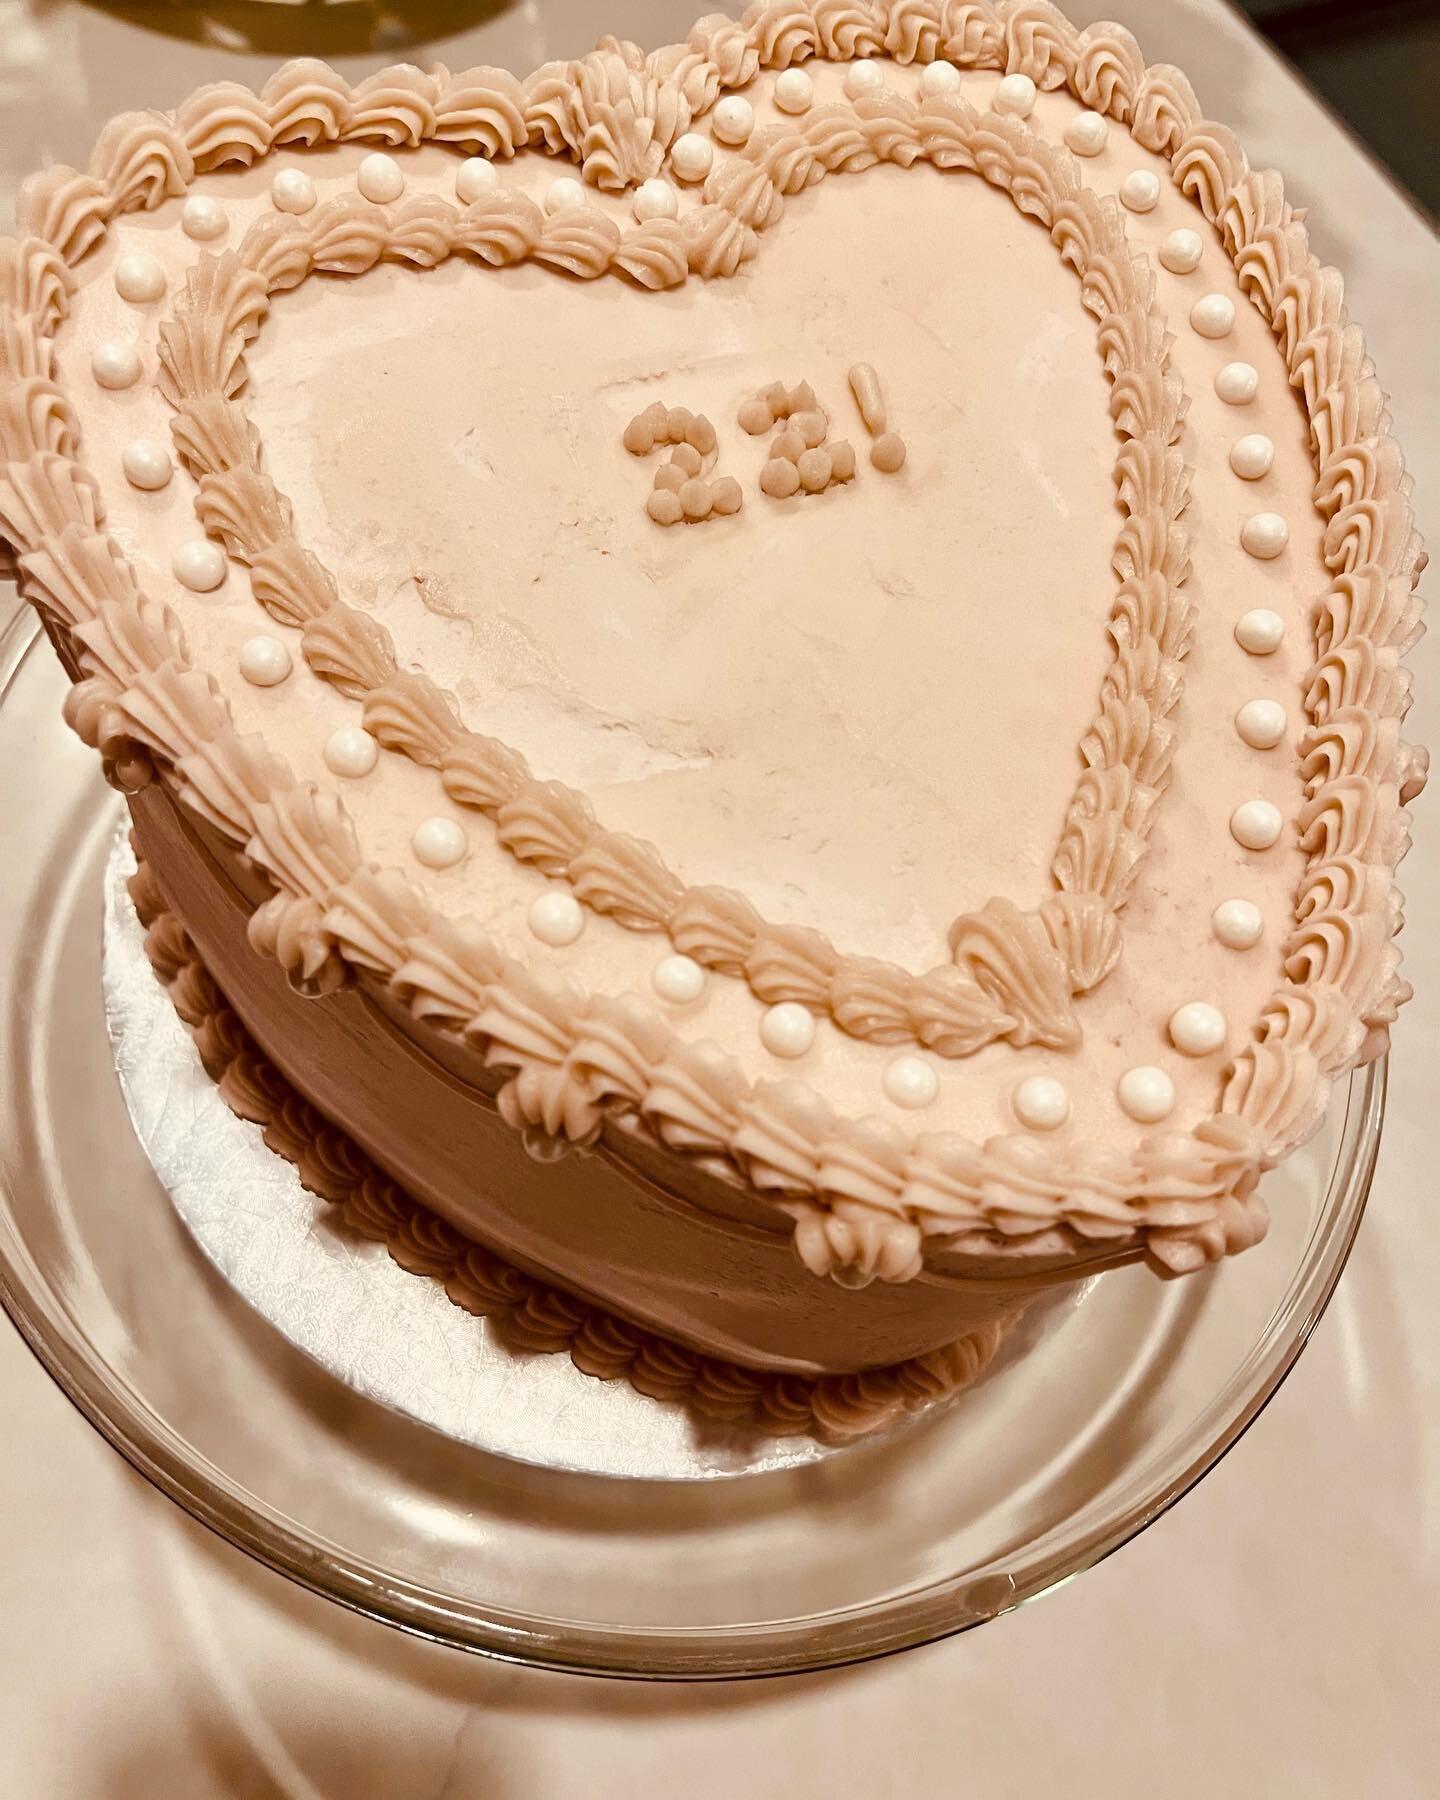 Chocolate cake + raspberry filling + vanilla frosting 🍰
Happy Birthday Chlo&eacute; 🎉🥂
.
.
.
.
.
.
.
.
.
#happybirthday#cake#celebrate#birthdaycake#birthdaygirl#chocolate#chocolatecake#raspberry#frosting#Toronto#local#supportlocal